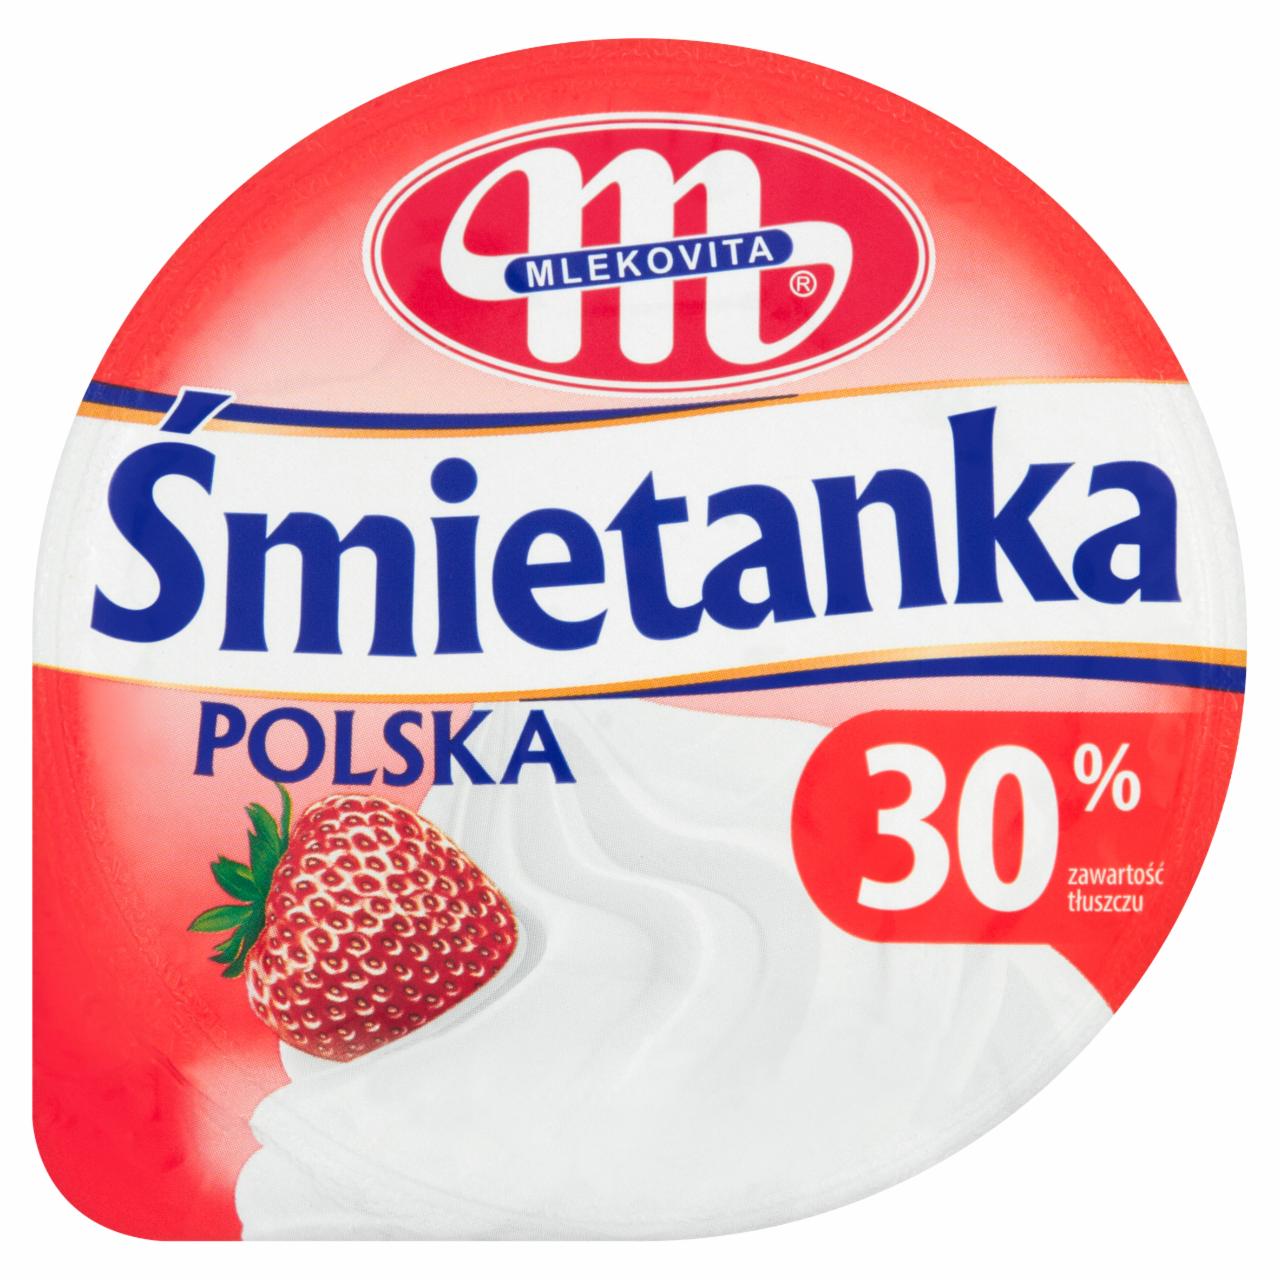 Zdjęcia - Śmietanka Polska 30% Mlekovita